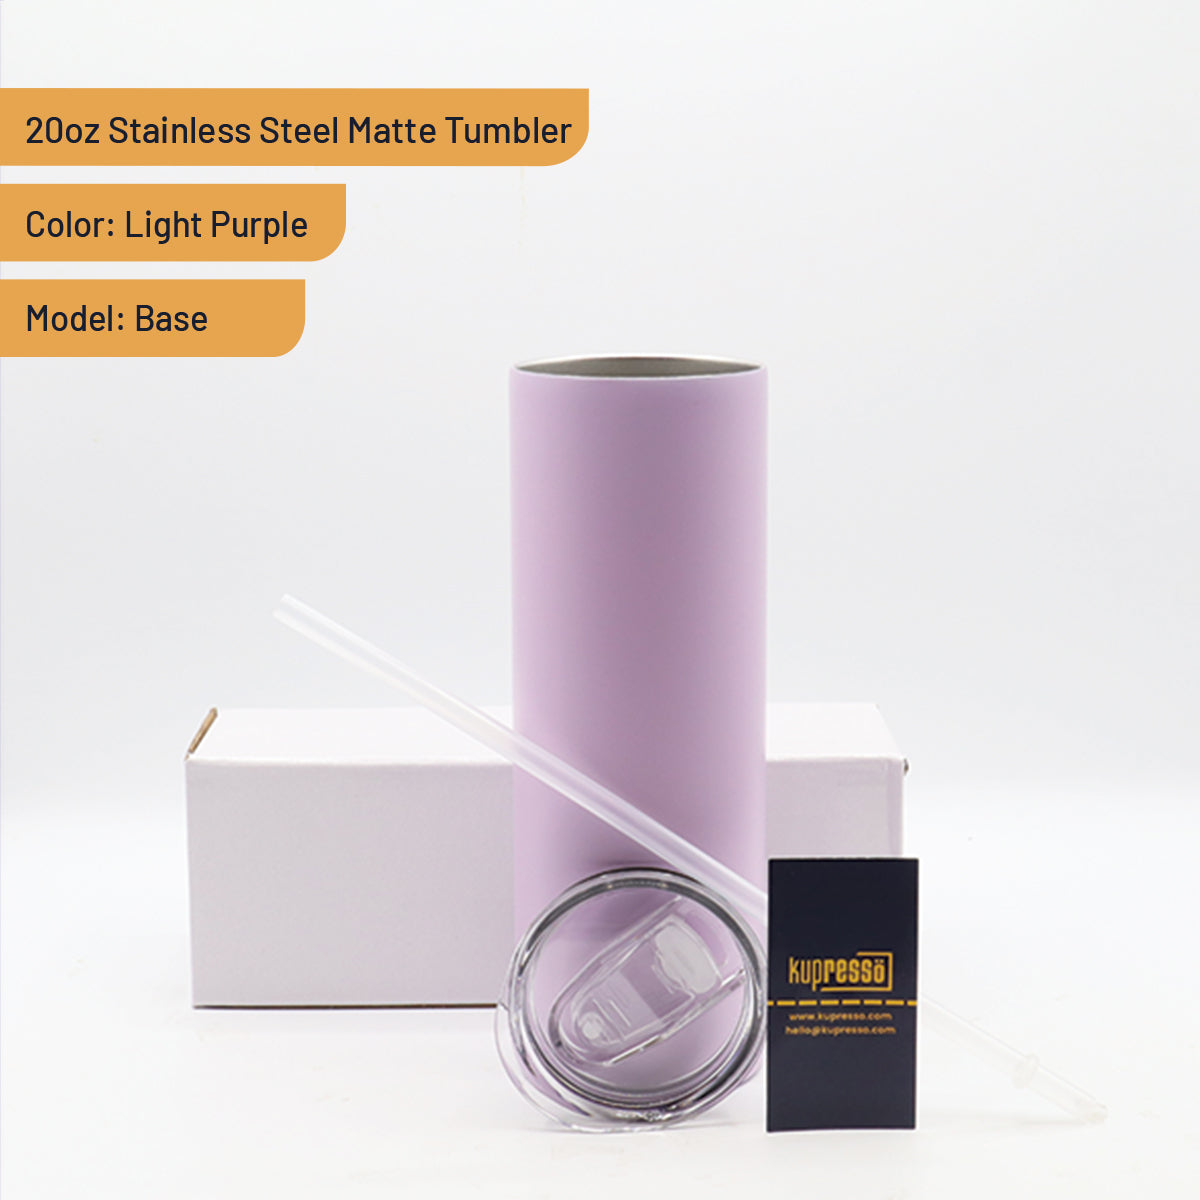 20oz Stainless Steel Matte Tumbler 20oz Stainless Steel Tumblers Kupresso Base (White Gift Box) Light Purple 